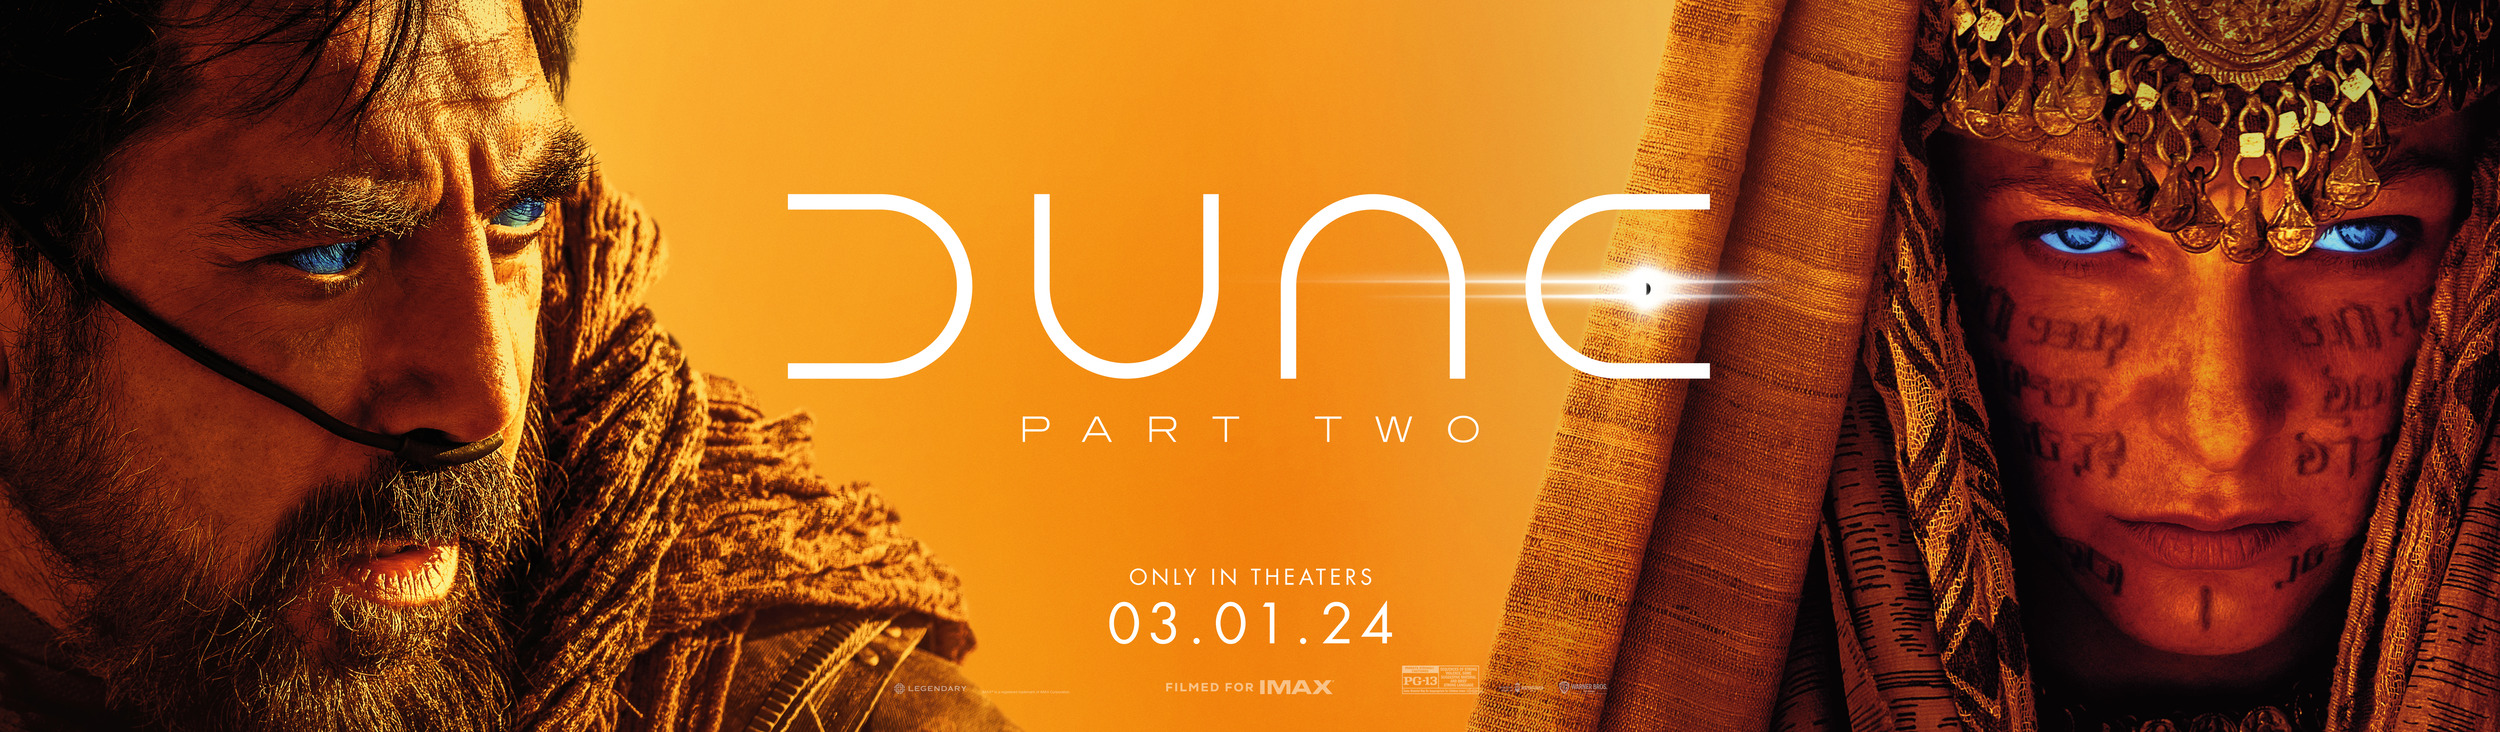 Mega Sized Movie Poster Image for Dune 2 (#23 of 31)